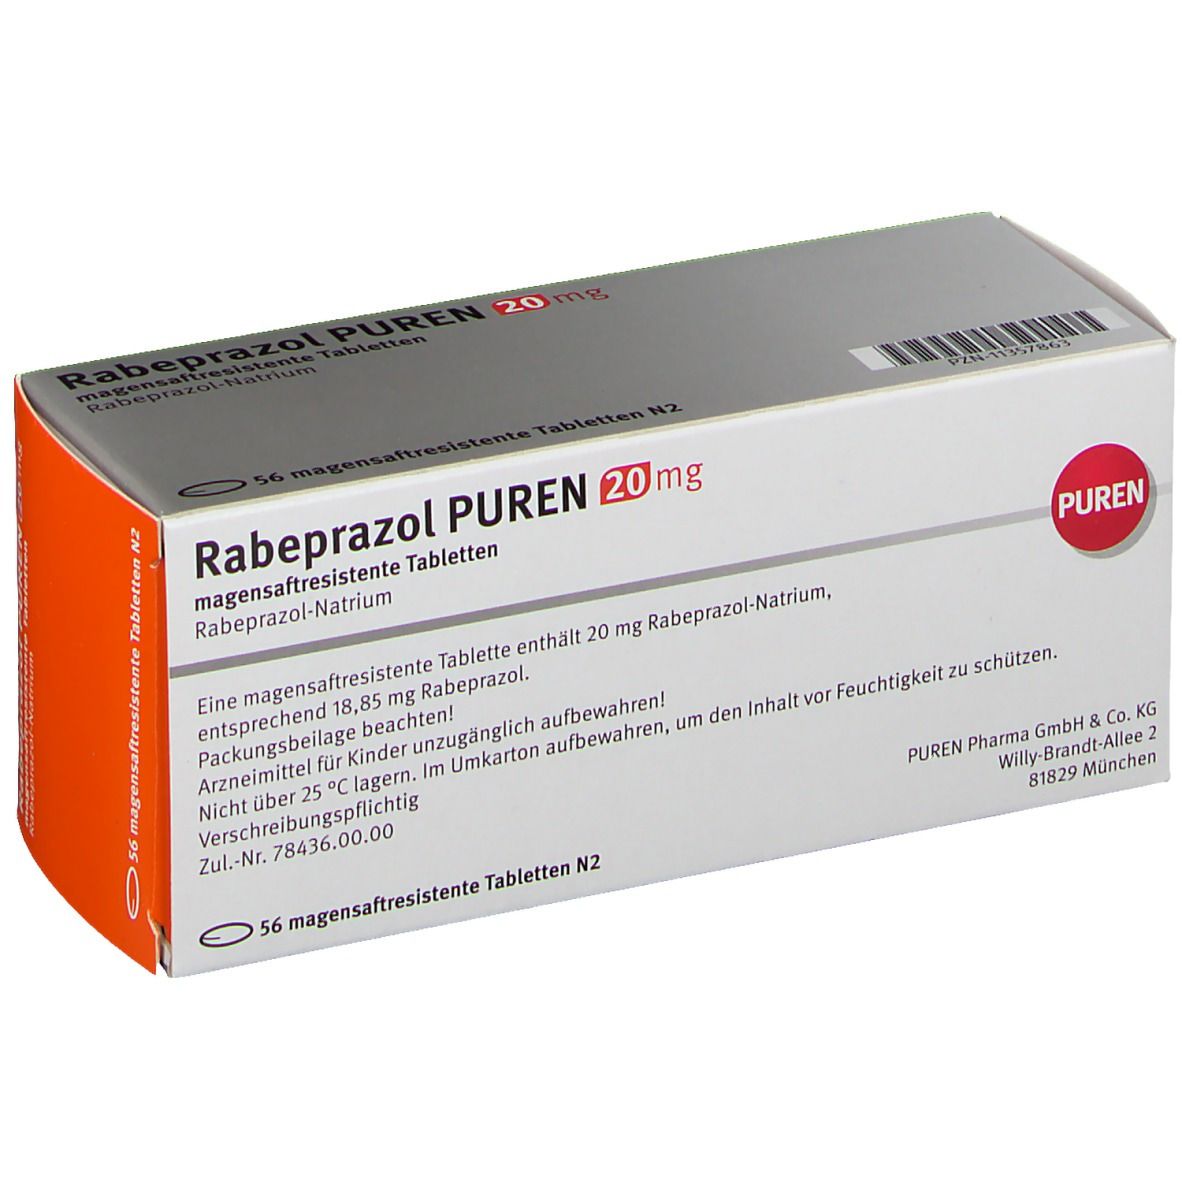 Rabeprazol PUREN 20 mg